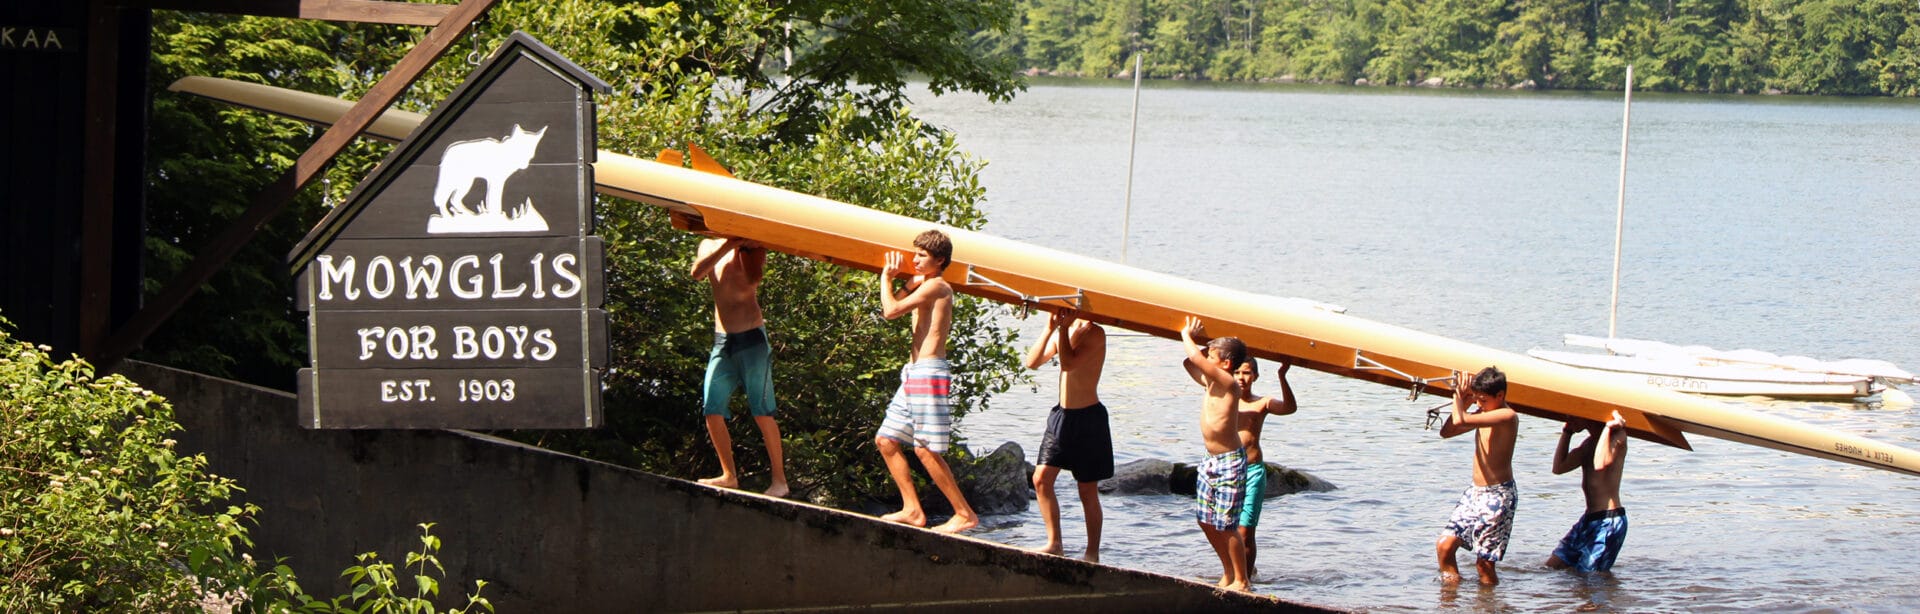 Boys learn teamwork at Camp Mowglis on Newfound Lake, NH